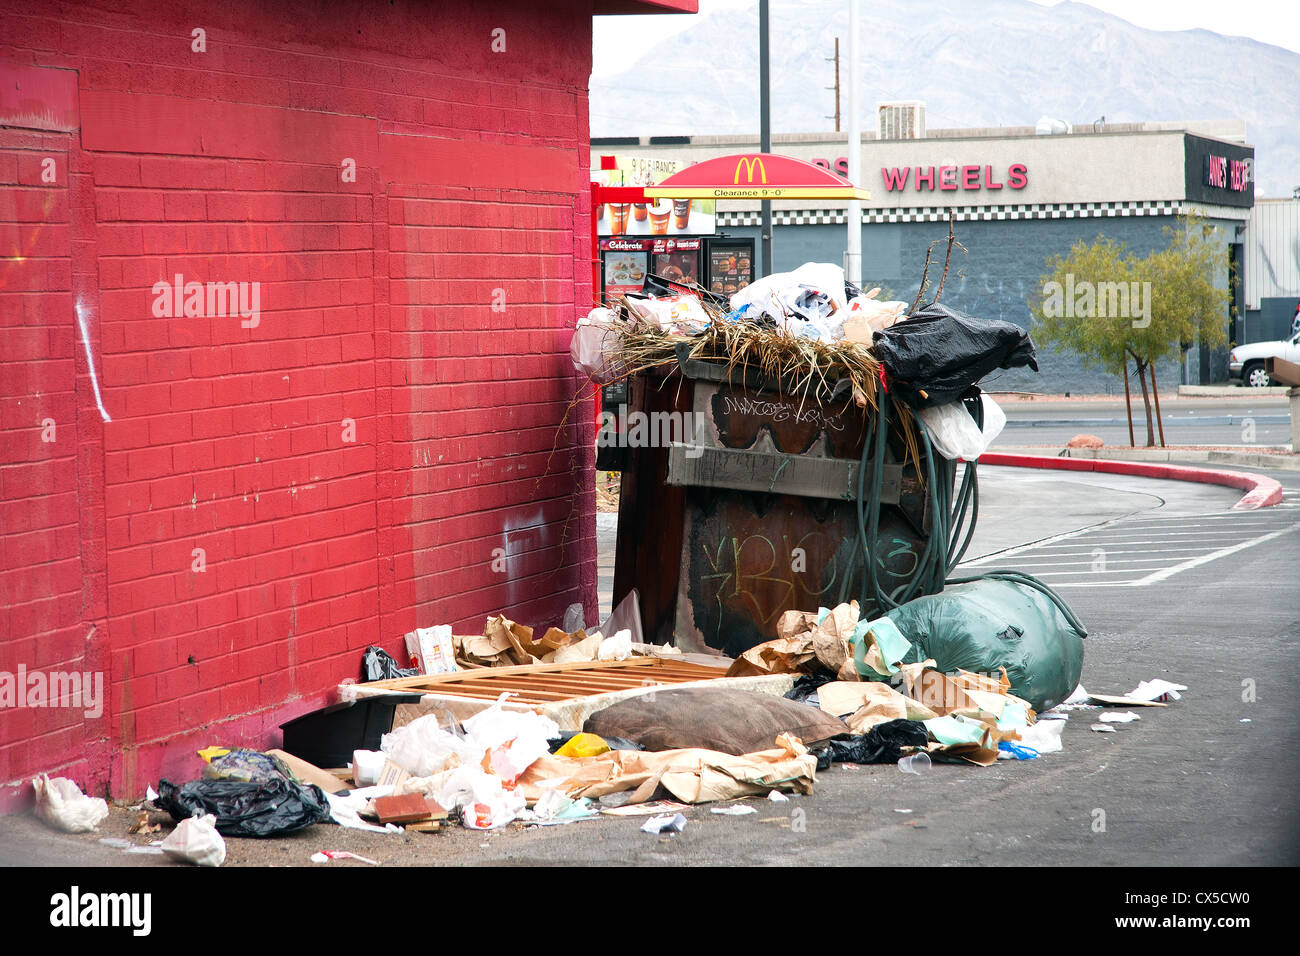 overfilled dumpster in trash neighborhood Stock Photo